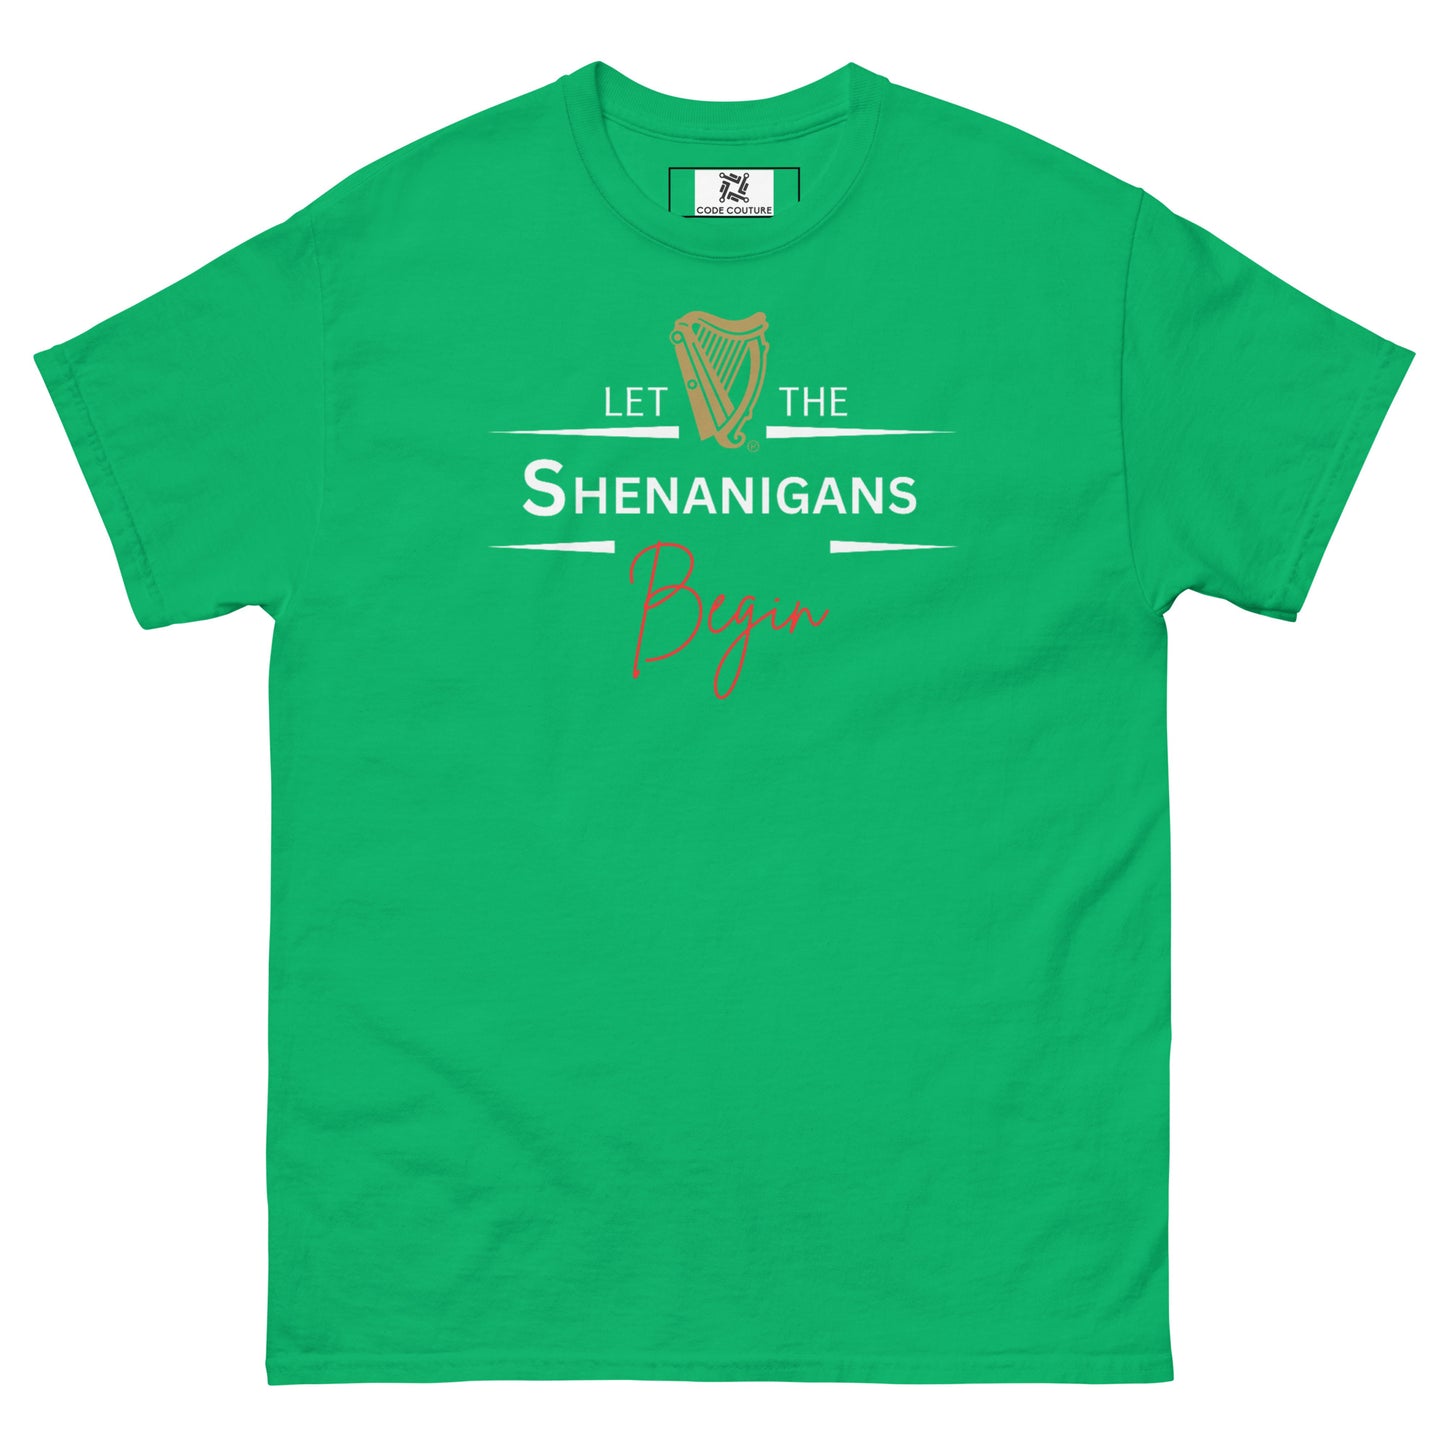 Shenanigans classic tee - Green